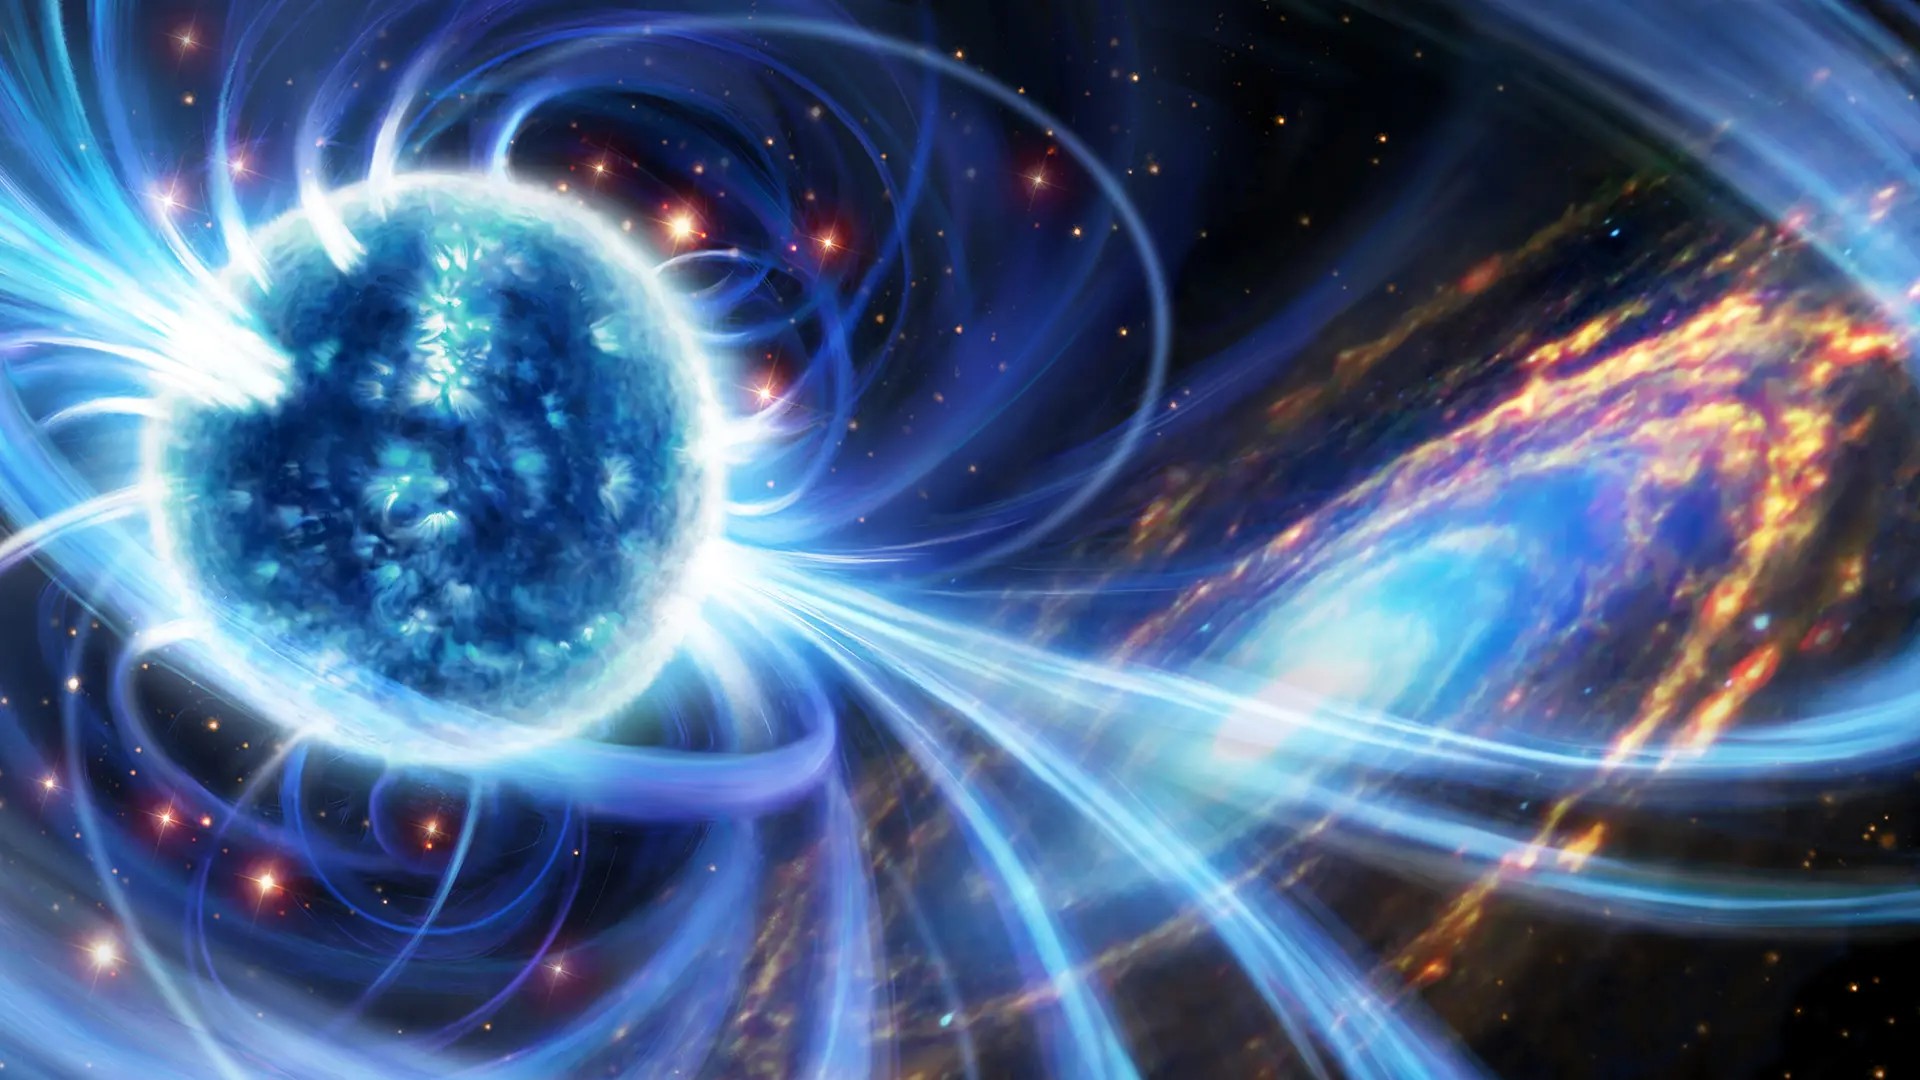 Magnetar illustration with fast radio burst (Credit: Danielle Futselaar artsource.nl)